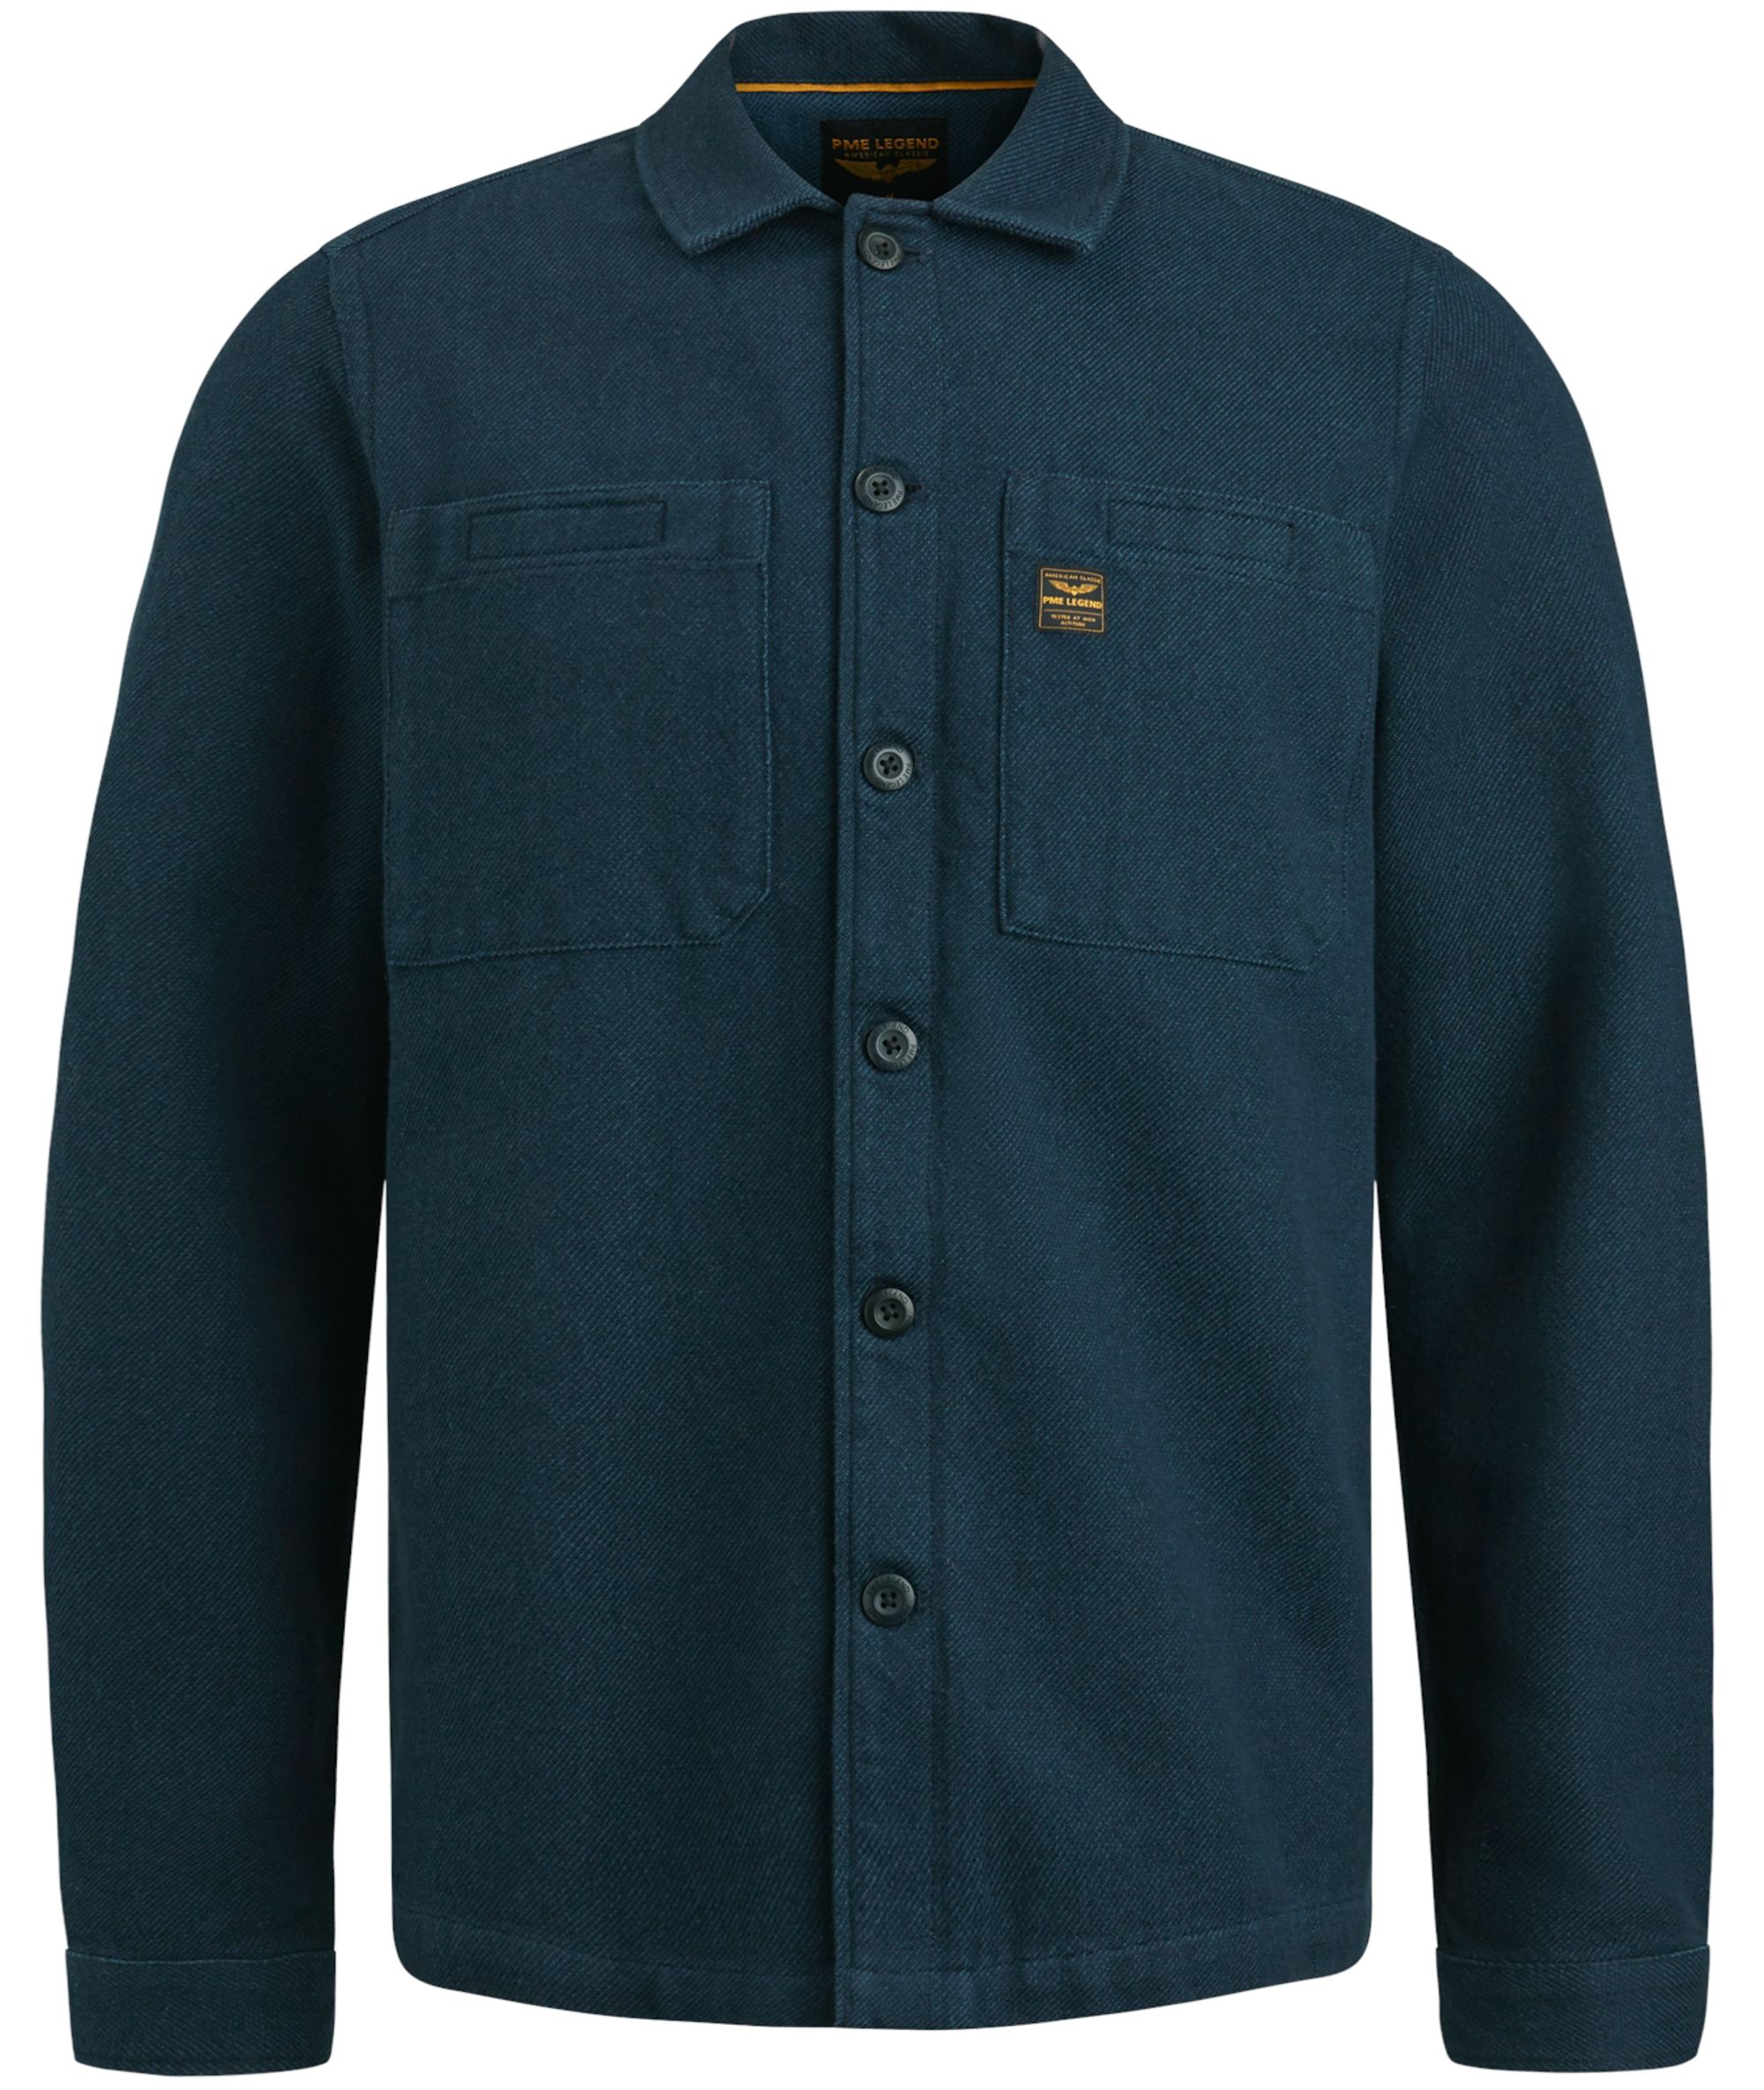 PME Legend Casual Overhemd LM Blauw 087146-001-L